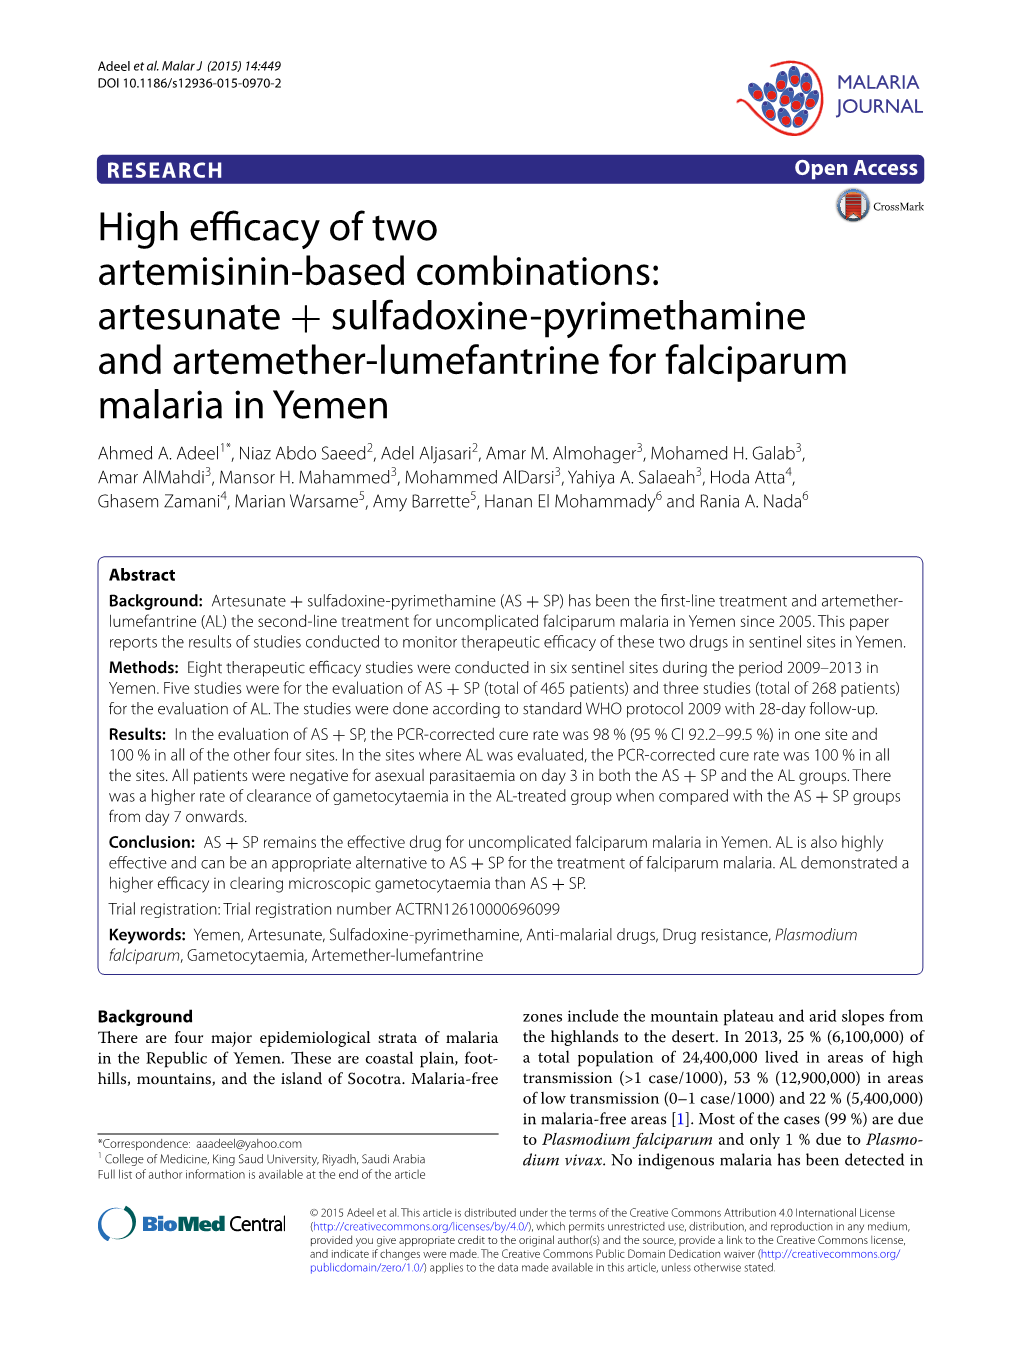 Artesunate + Sulfadoxine-Pyrimethamine and Artemether-Lumefantrine for Falc